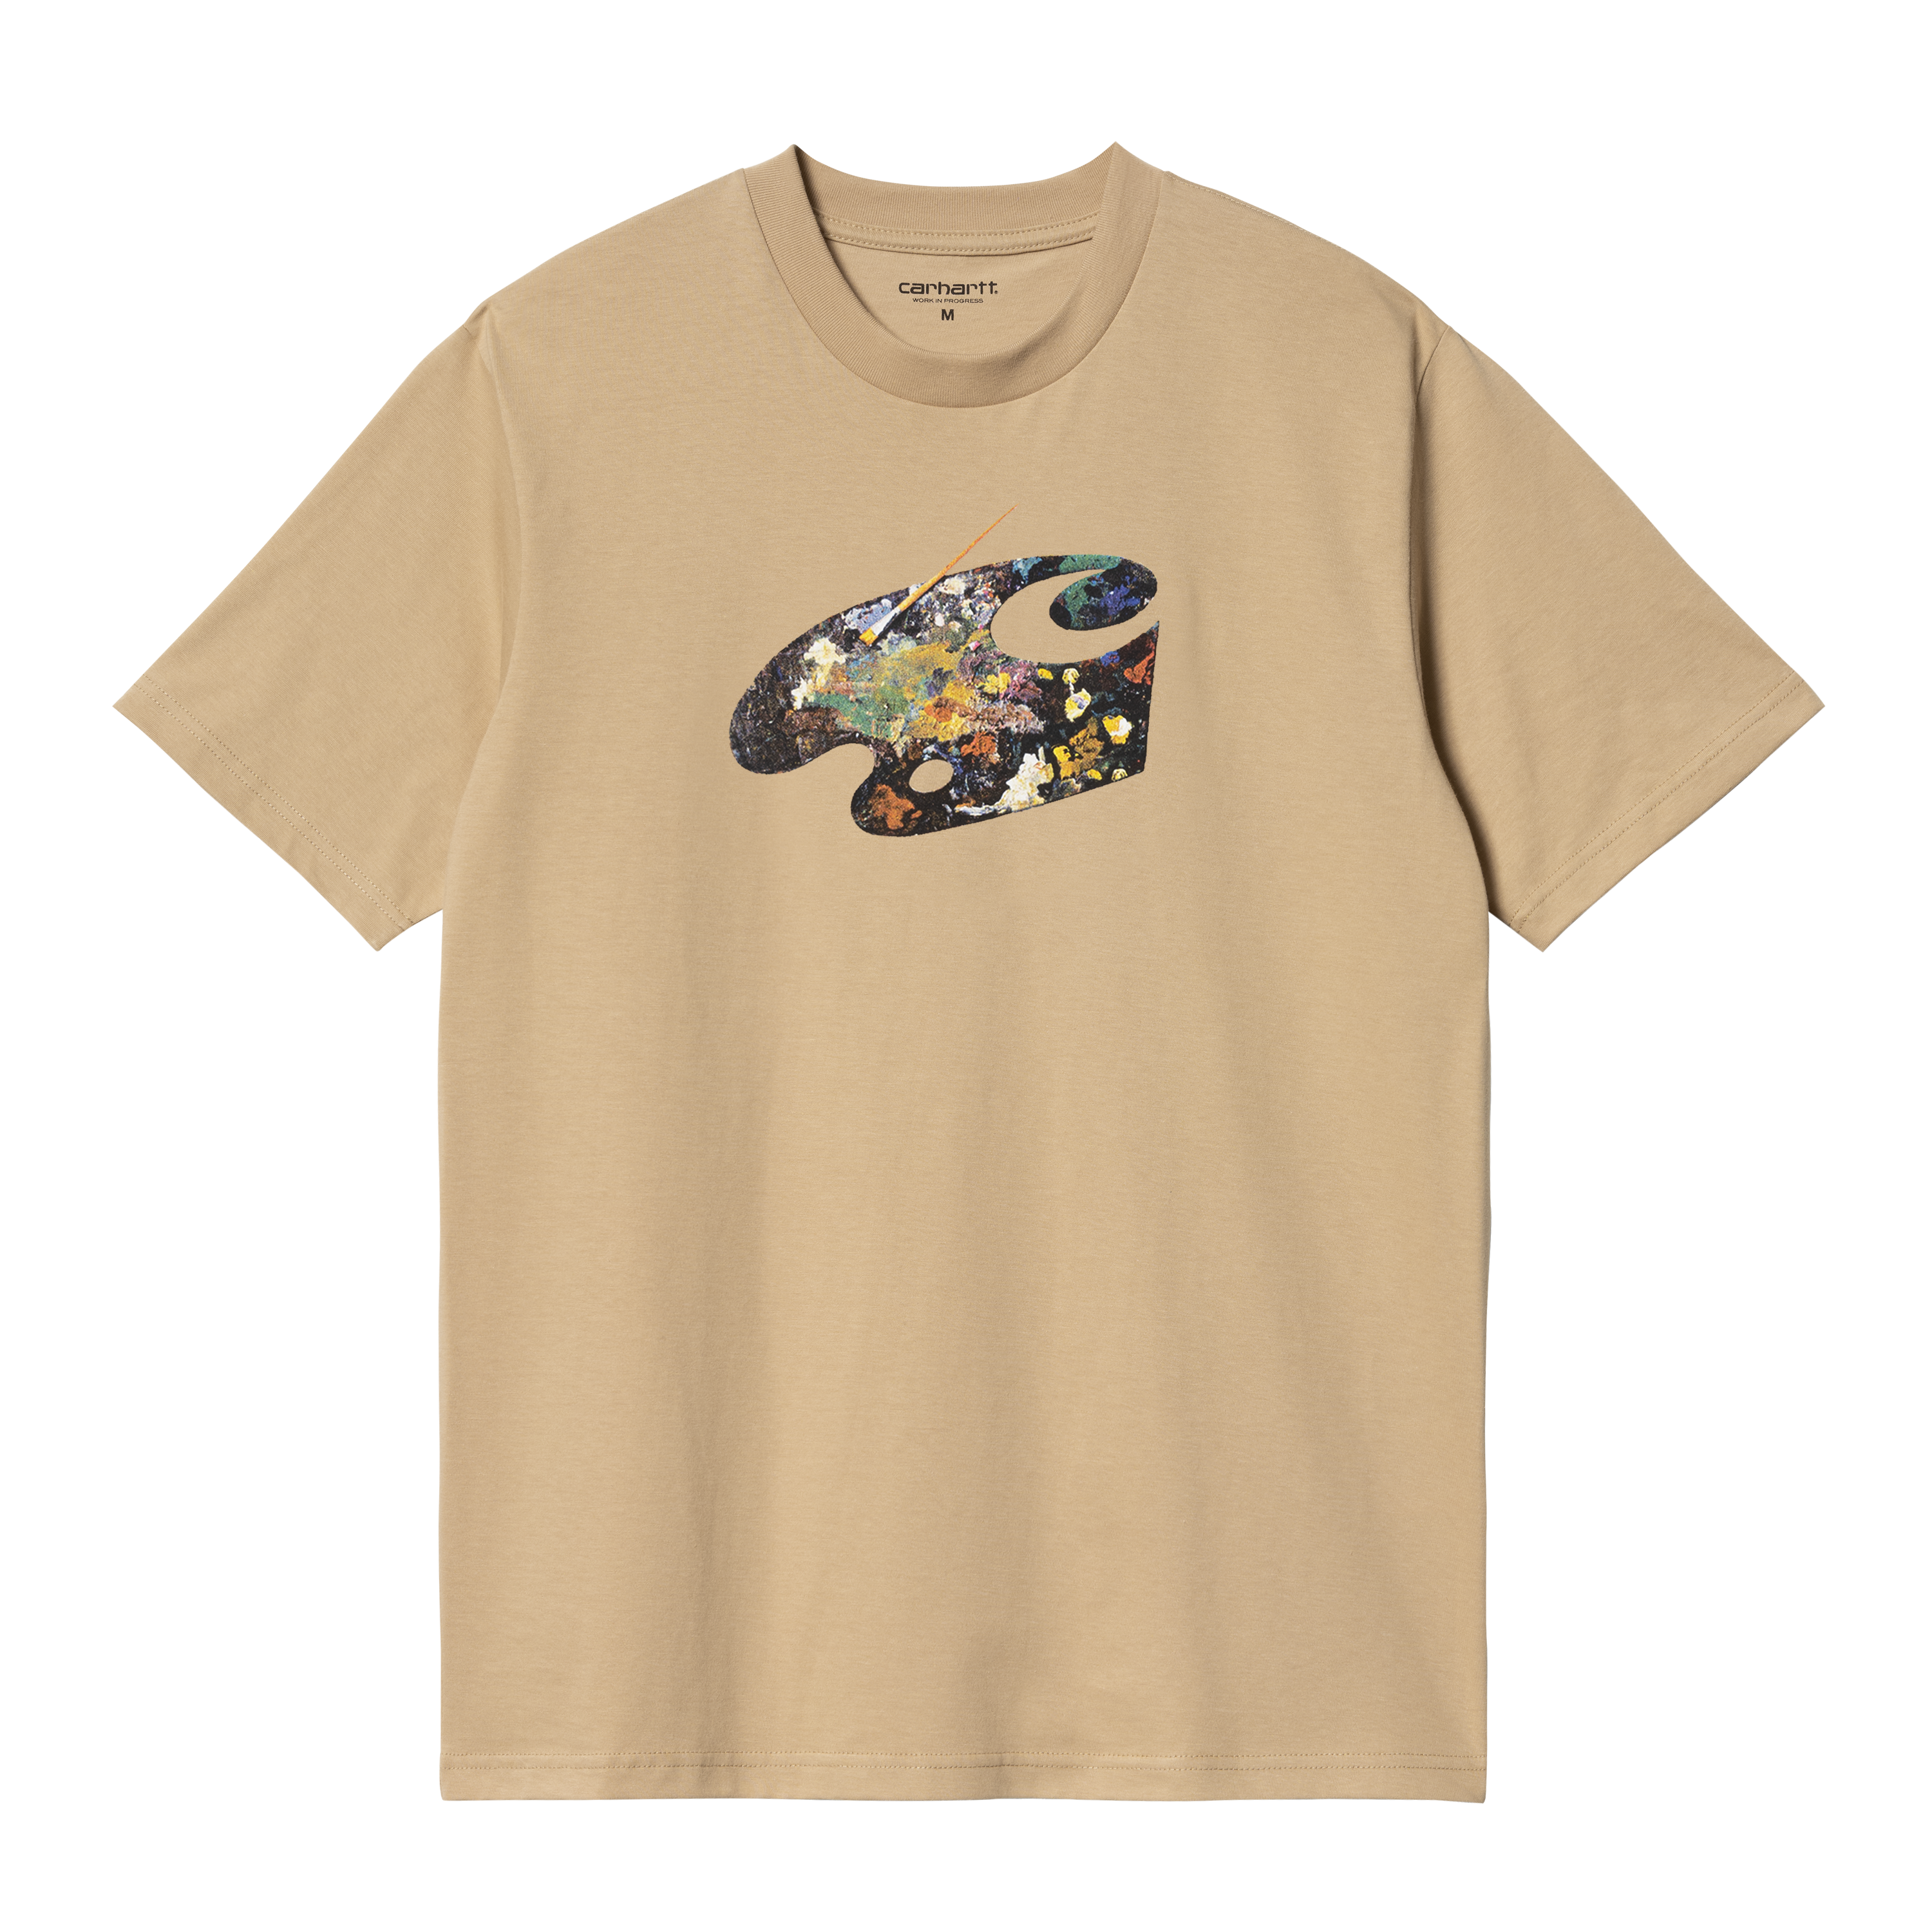 Carhartt WIP Short Sleeve Palette T-Shirt in Beige